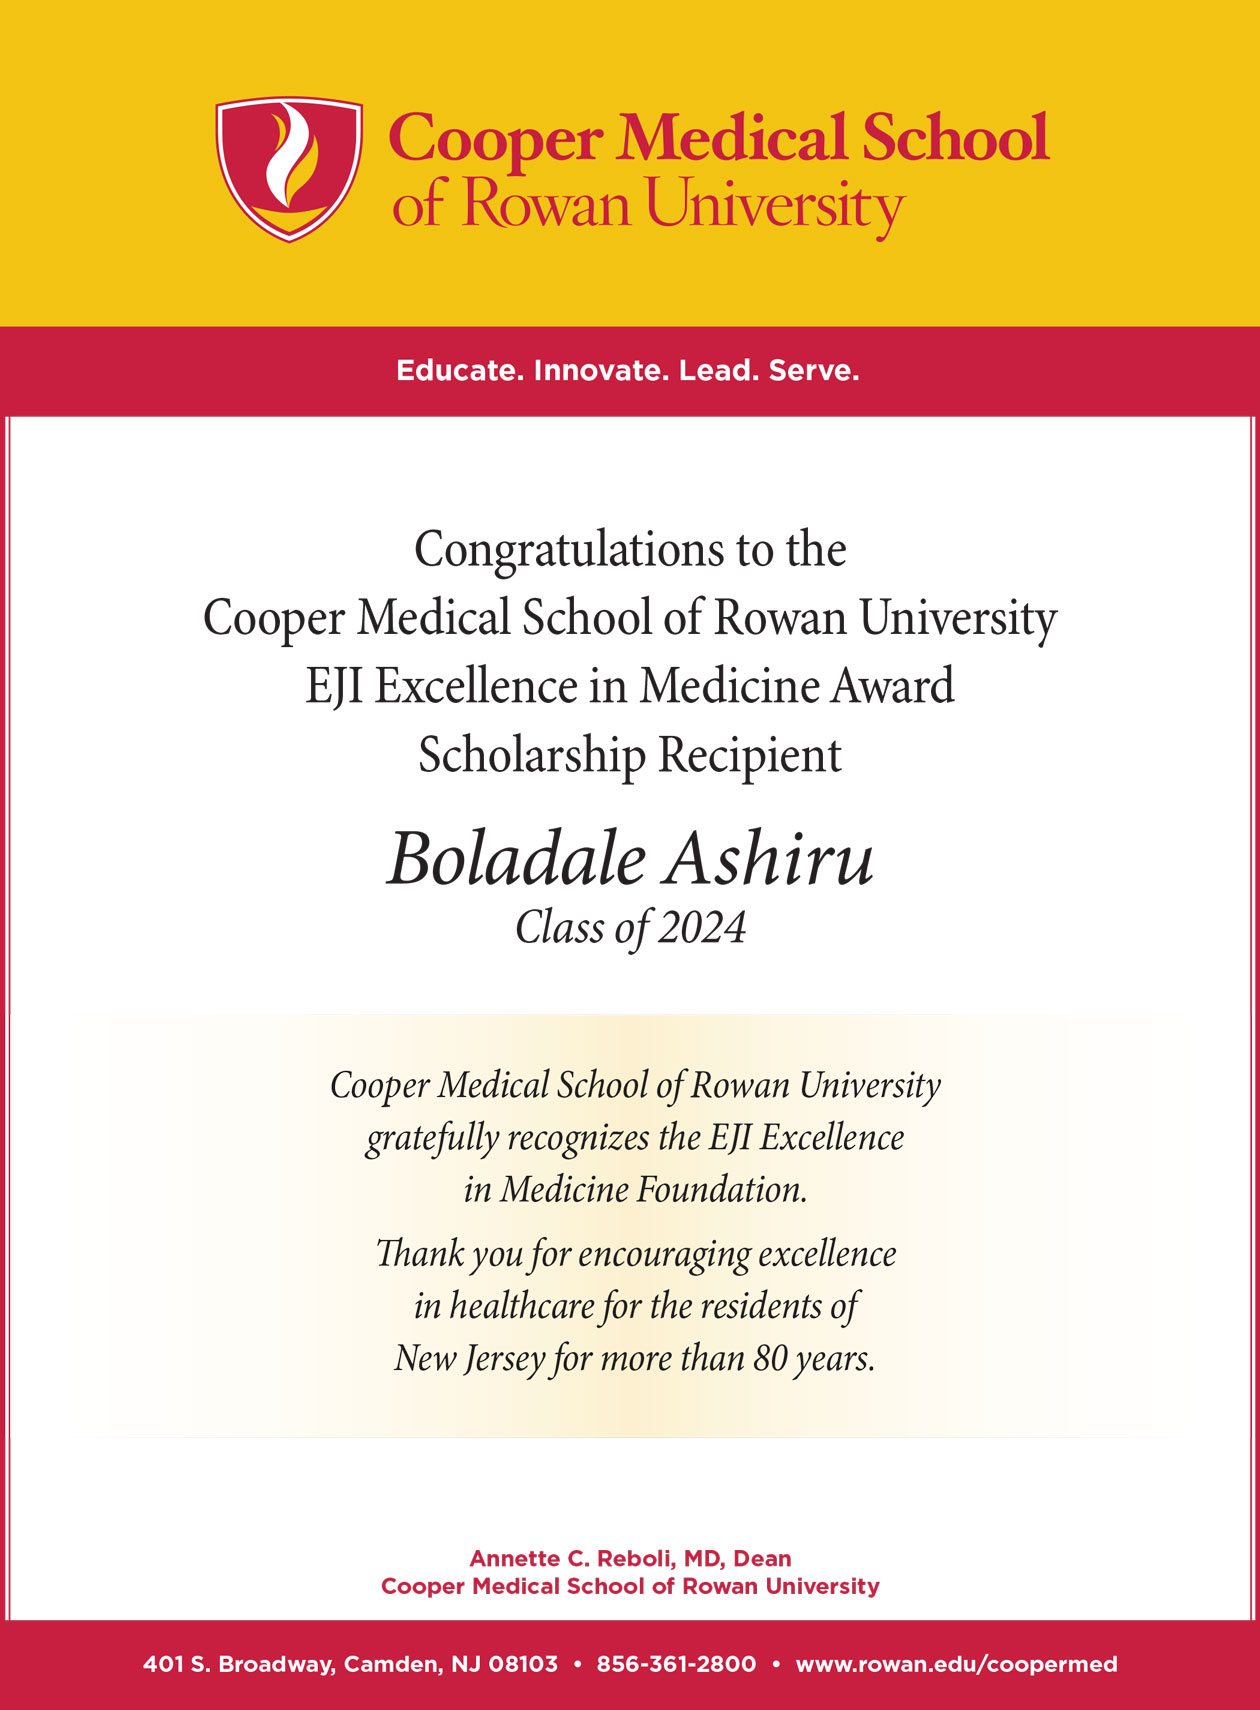 Cooper Medical School of Rowan University advertisement